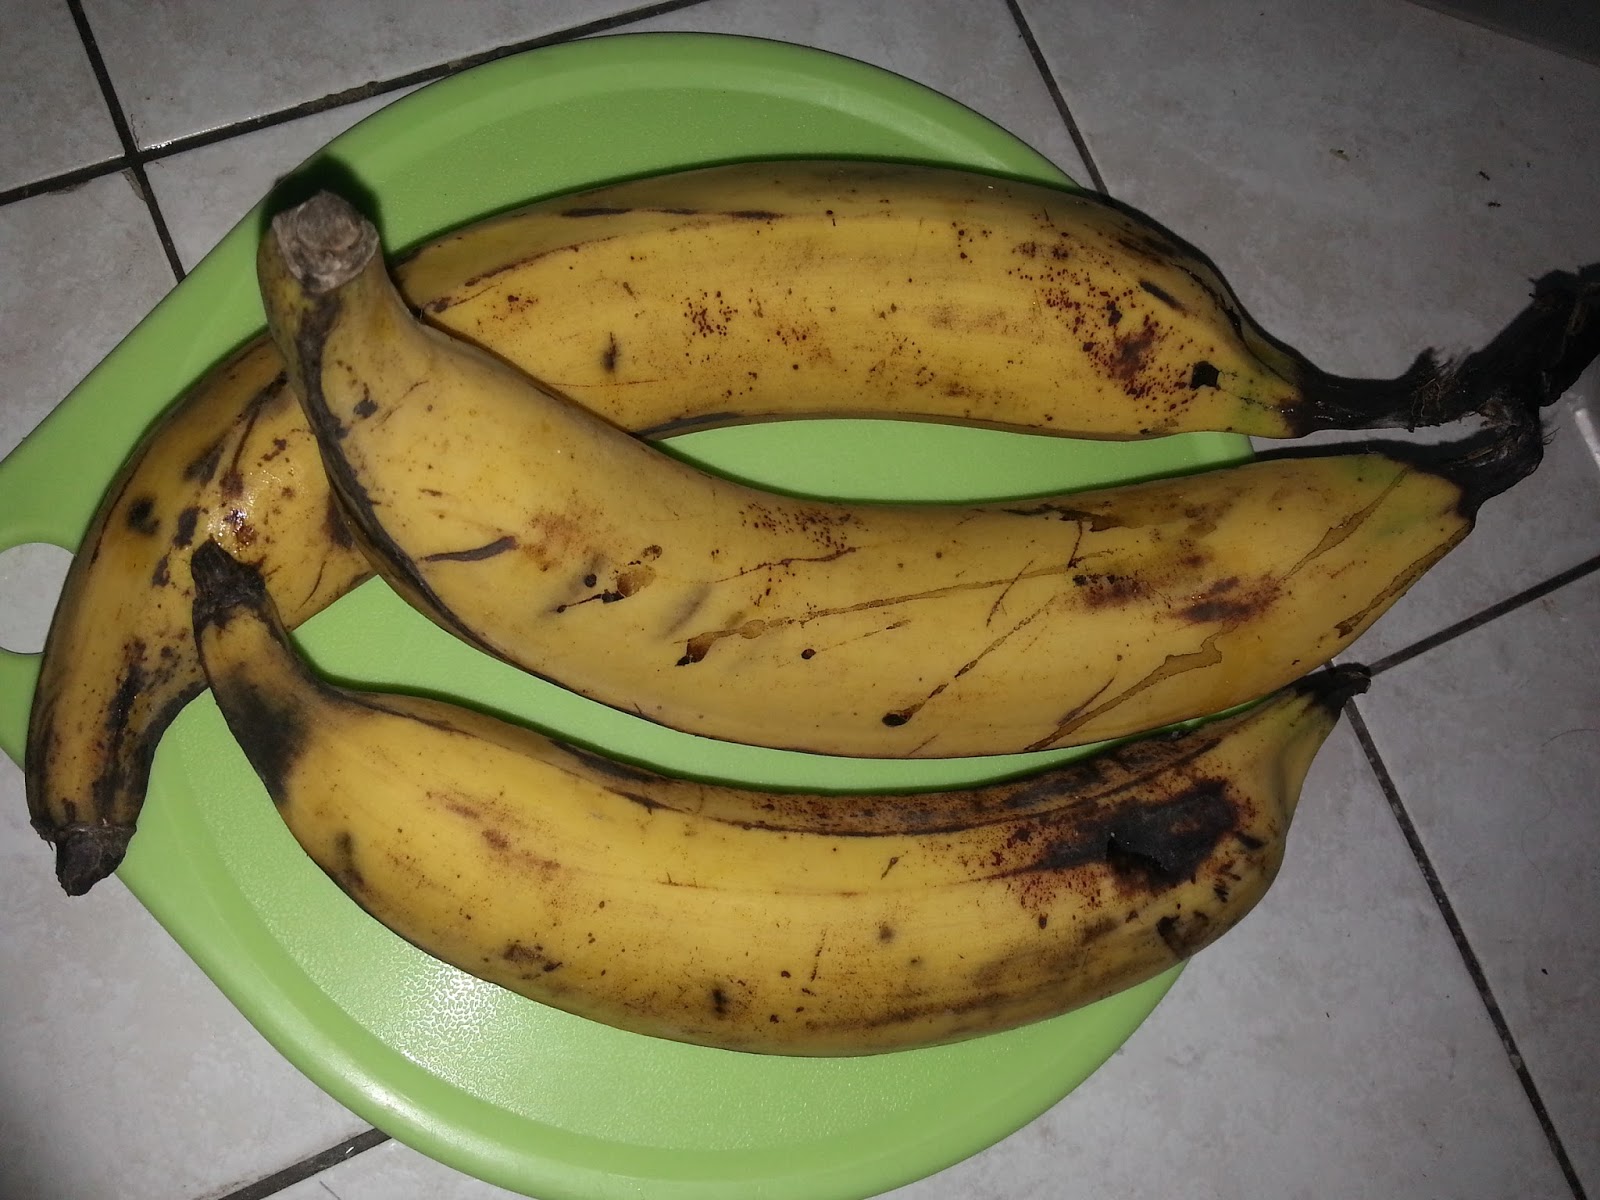 Go bananas. Пизанг банан. Банан со всех сторон. BANANAGUIDE. Banana Guide.